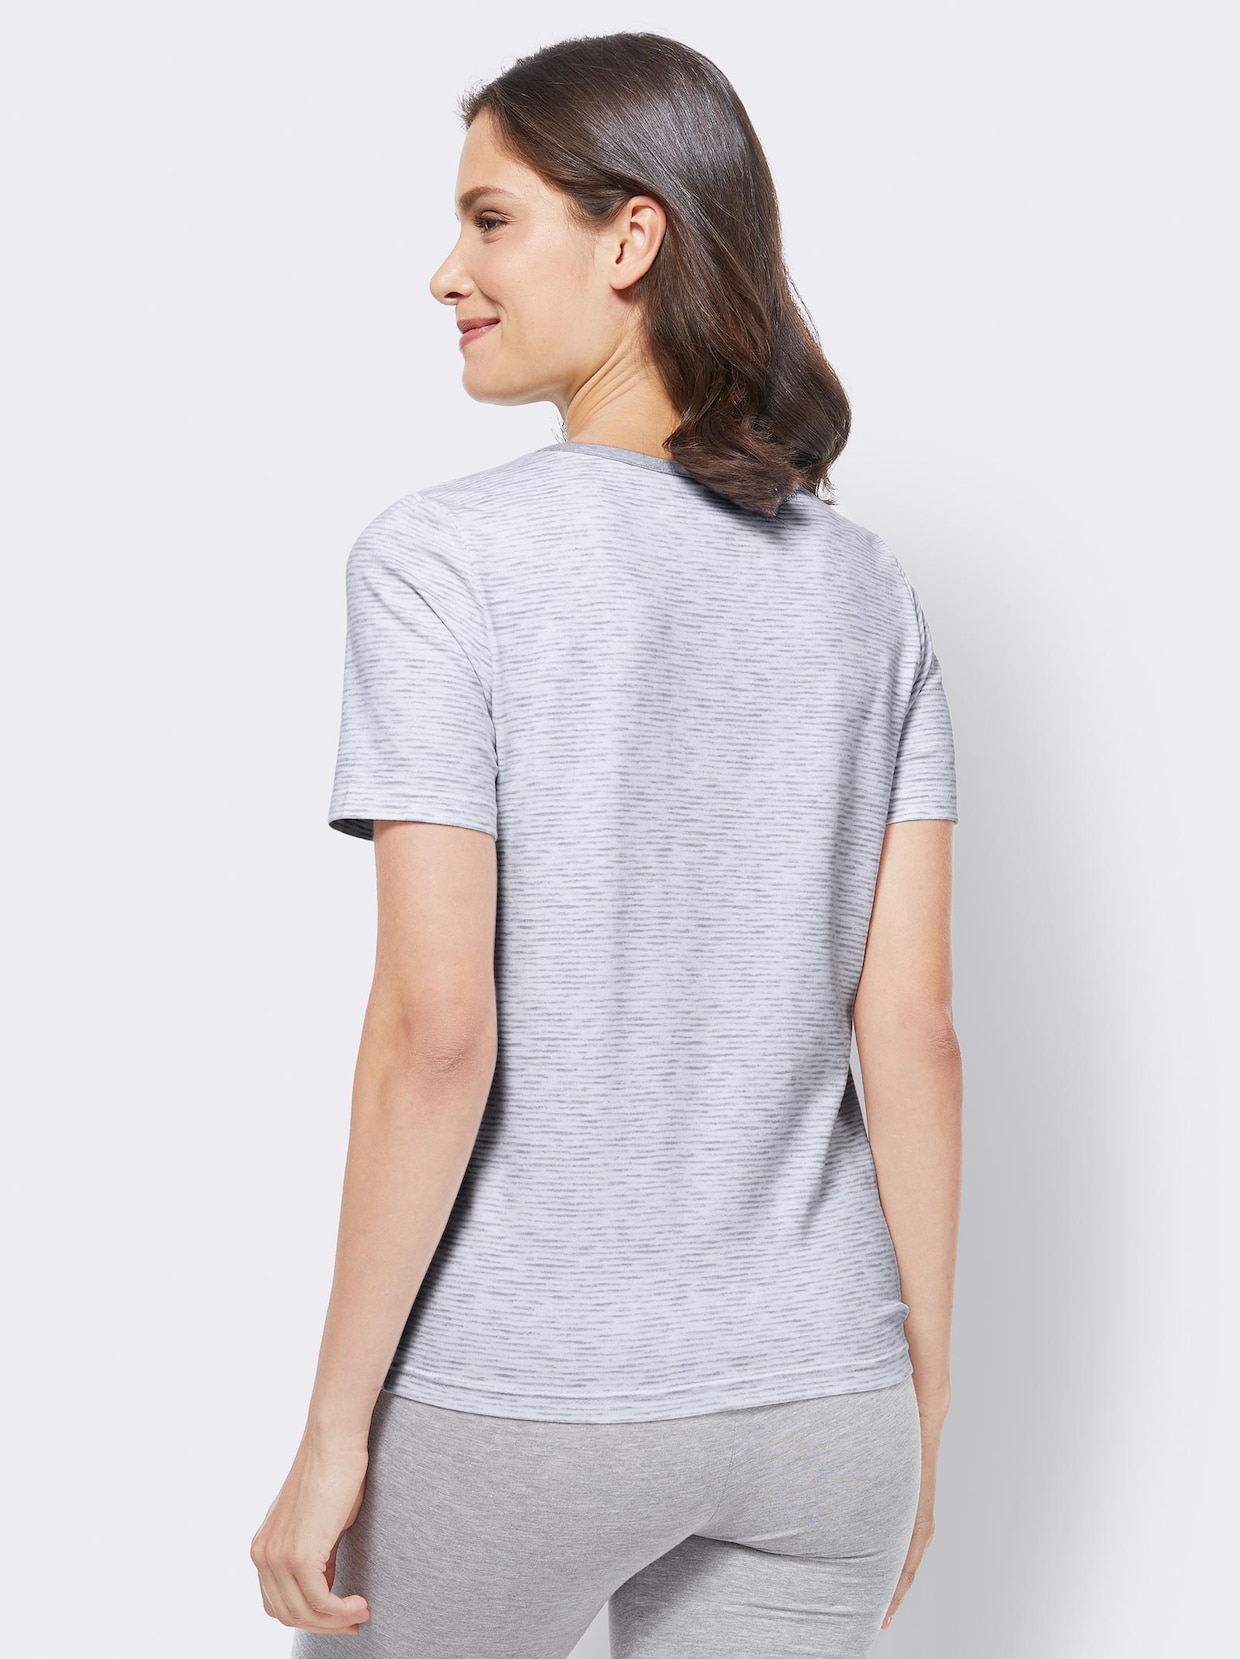 wäschepur Shirt - hellgrau-meliert + weiß-grau-meliert